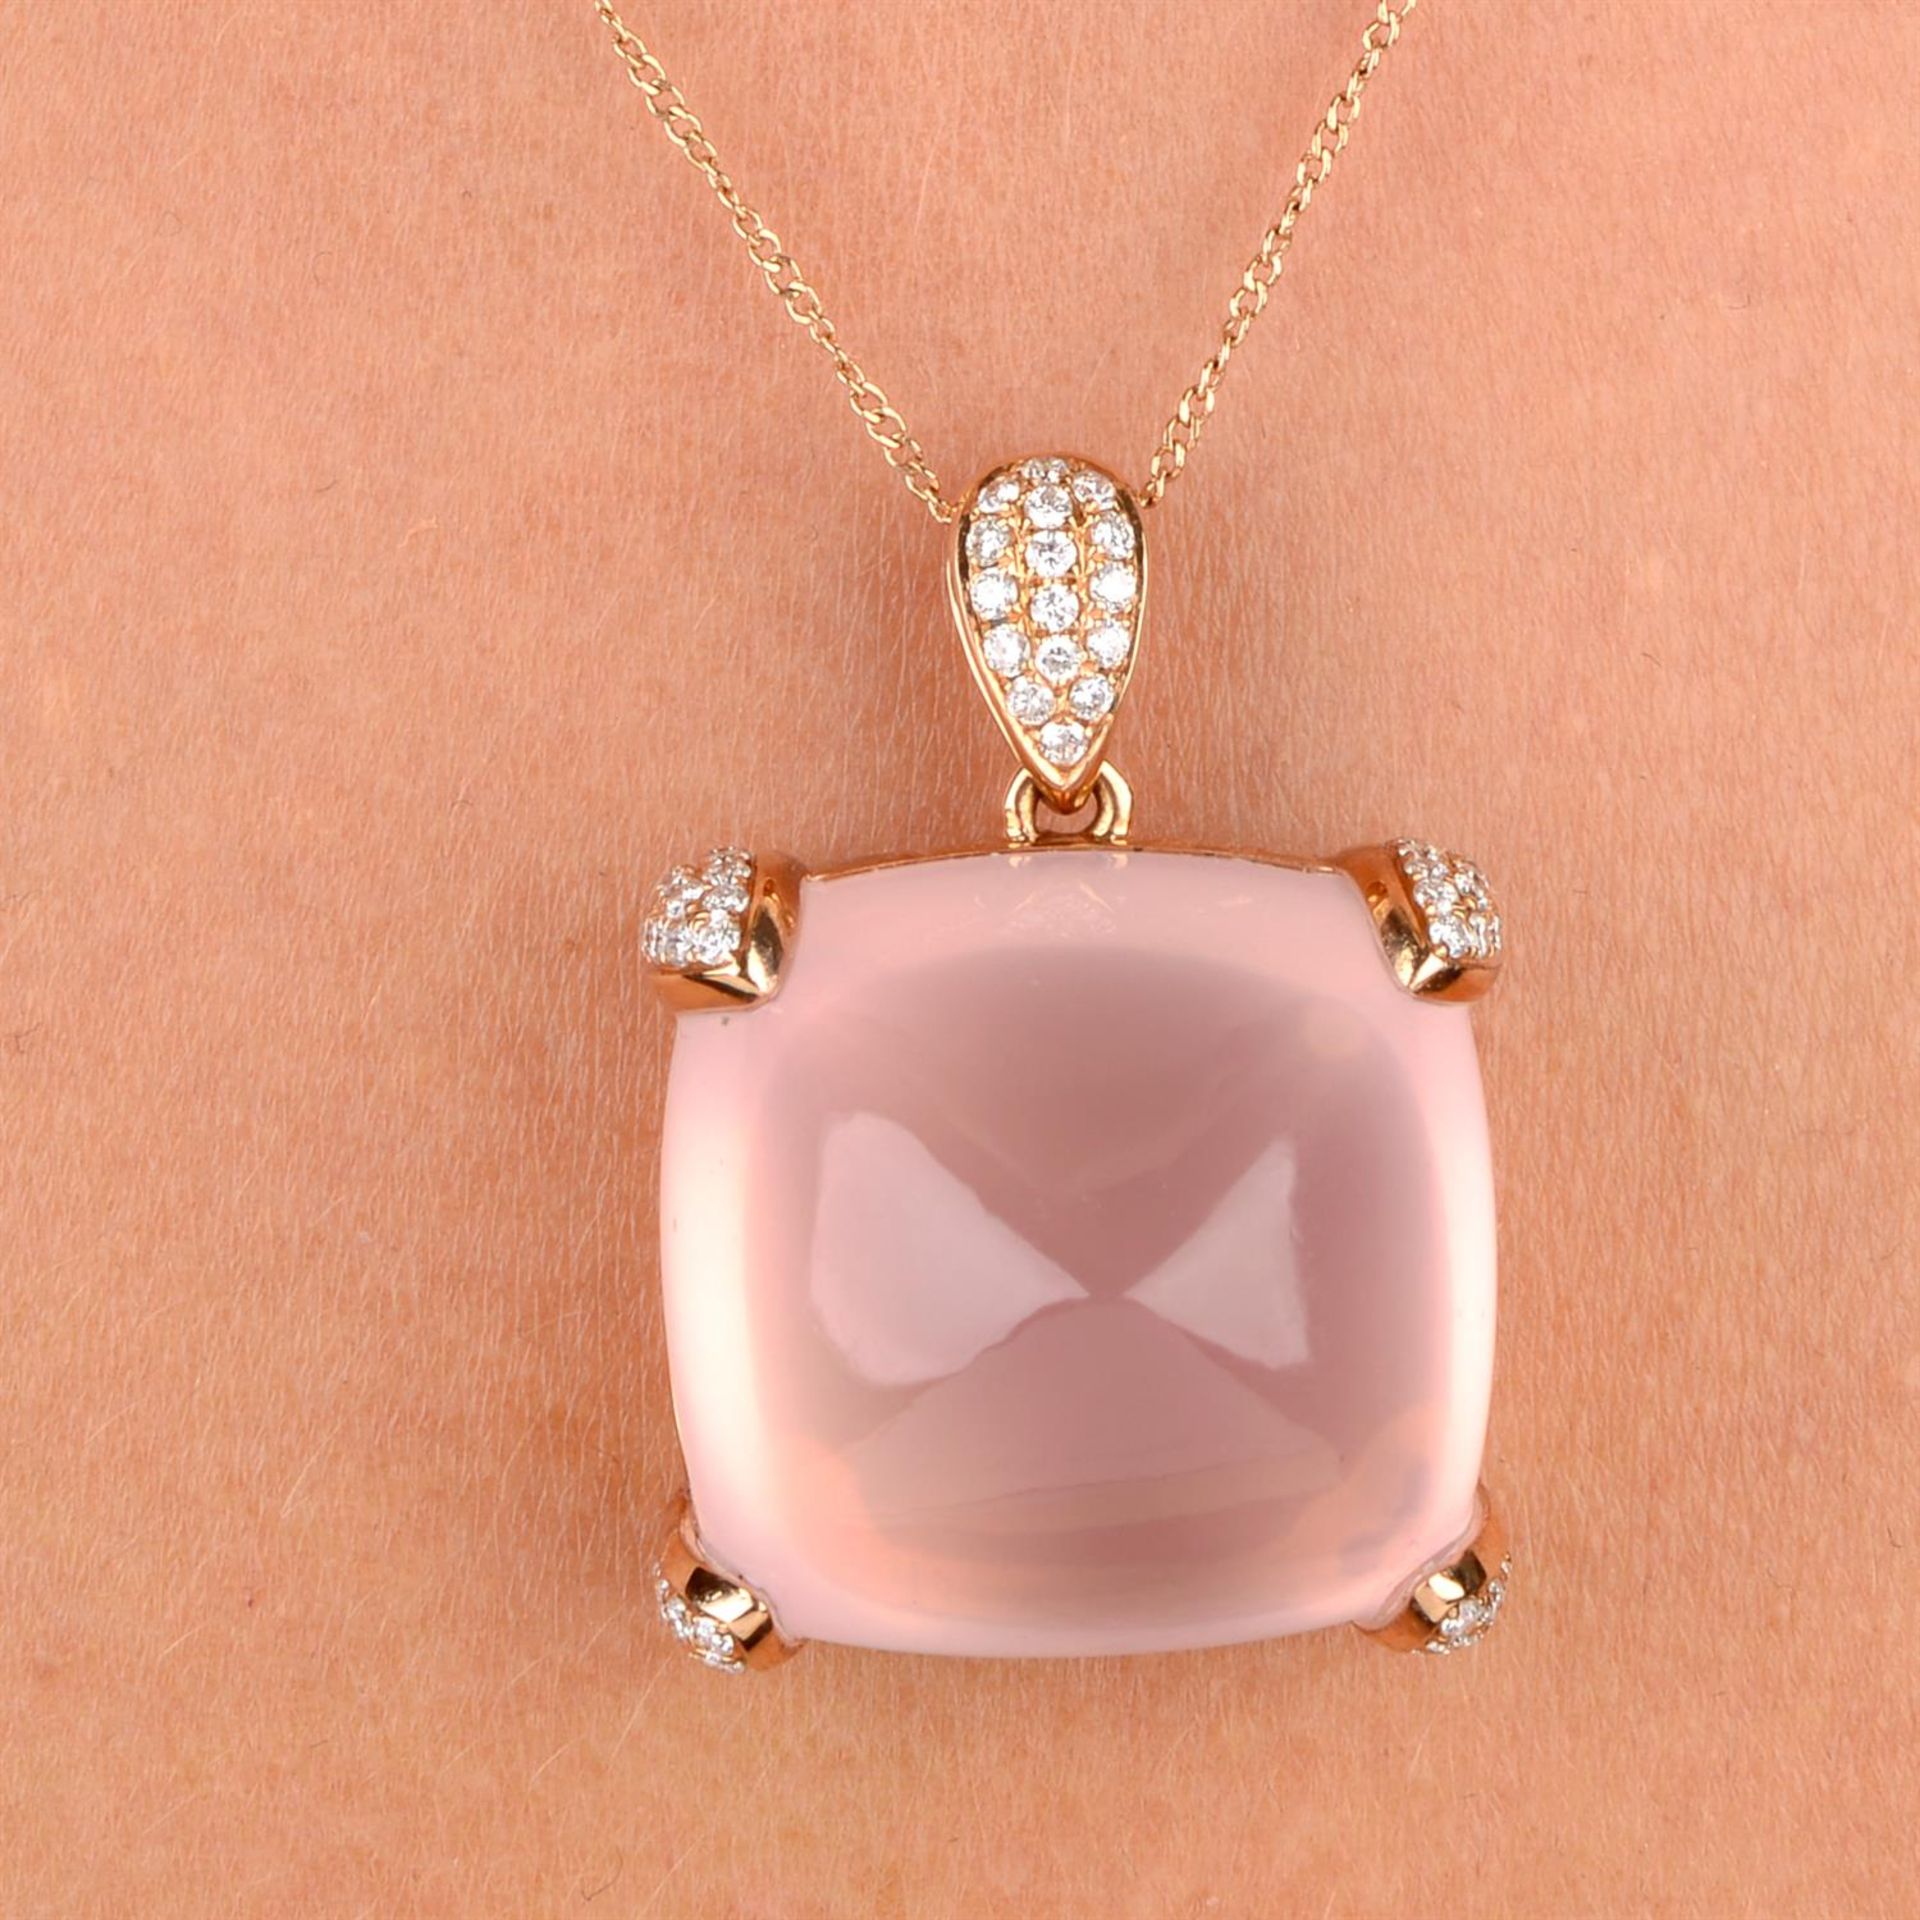 A rose quartz and pavé-set diamond pendant, with 18ct gold chain.